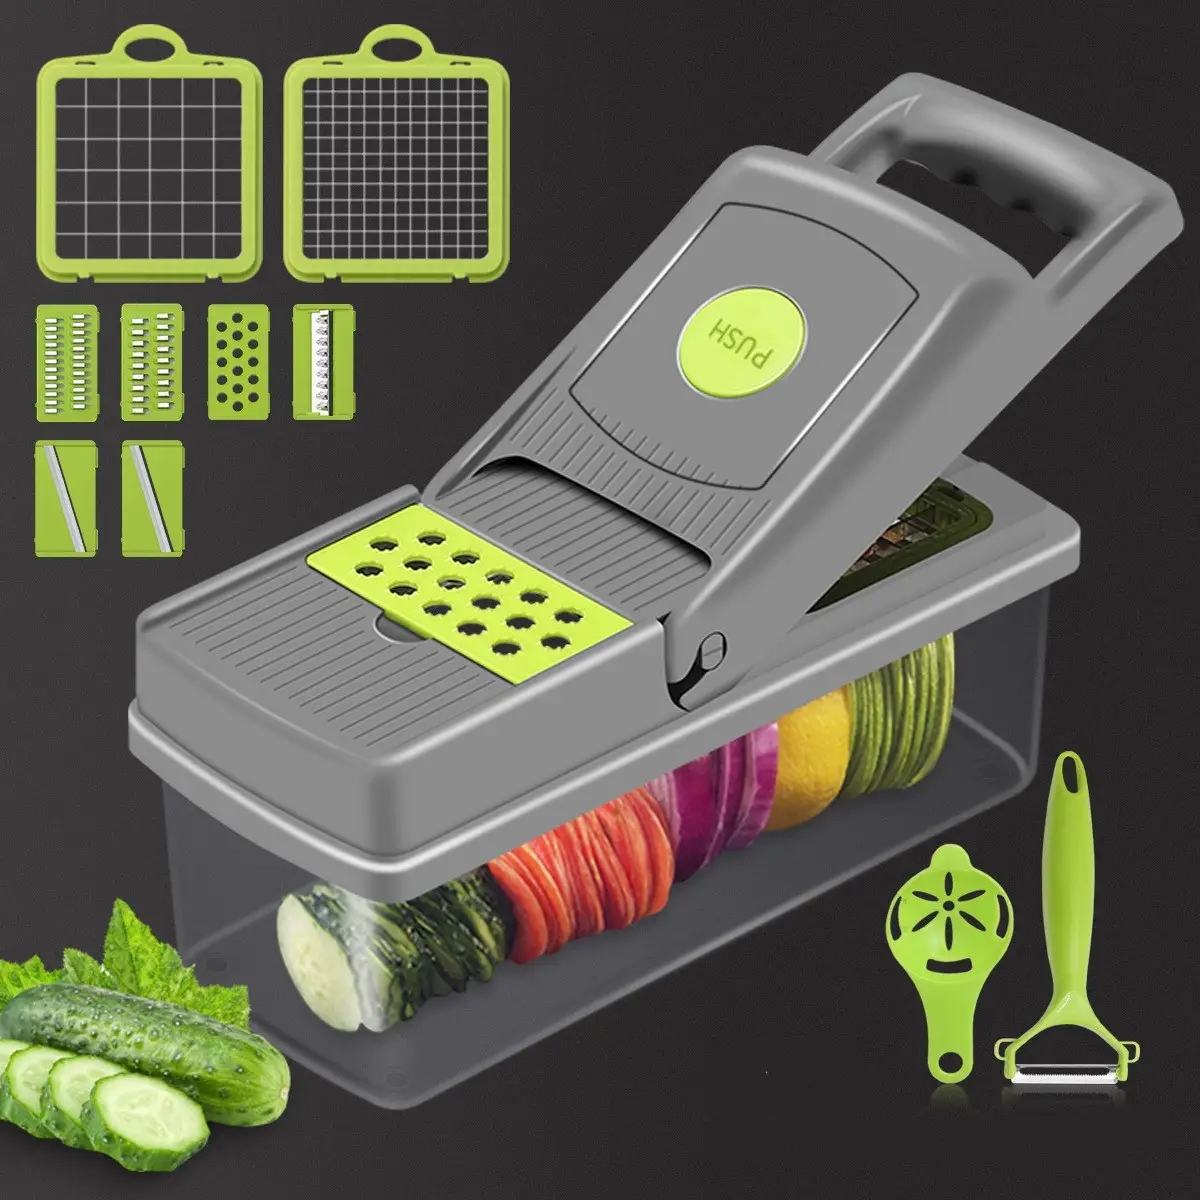 Picador de alimentos, fatiador de legumes e cortador espiralizador, ralador, ralador, conjuntos de utensílios de cozinha com recipiente